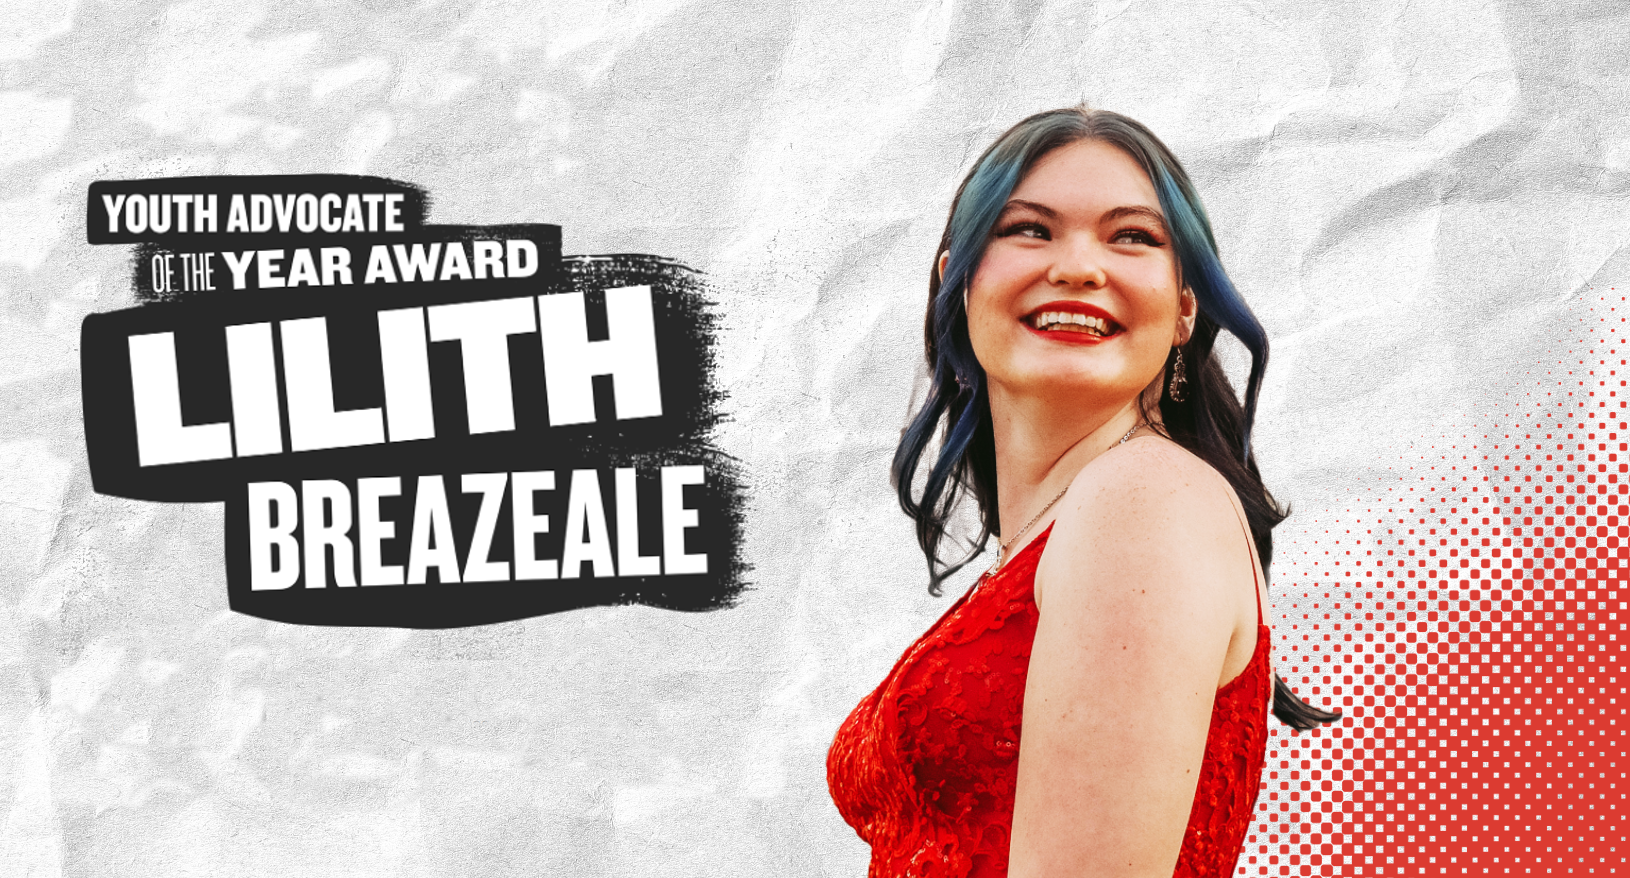 Lilith Breazeale - Award Announce